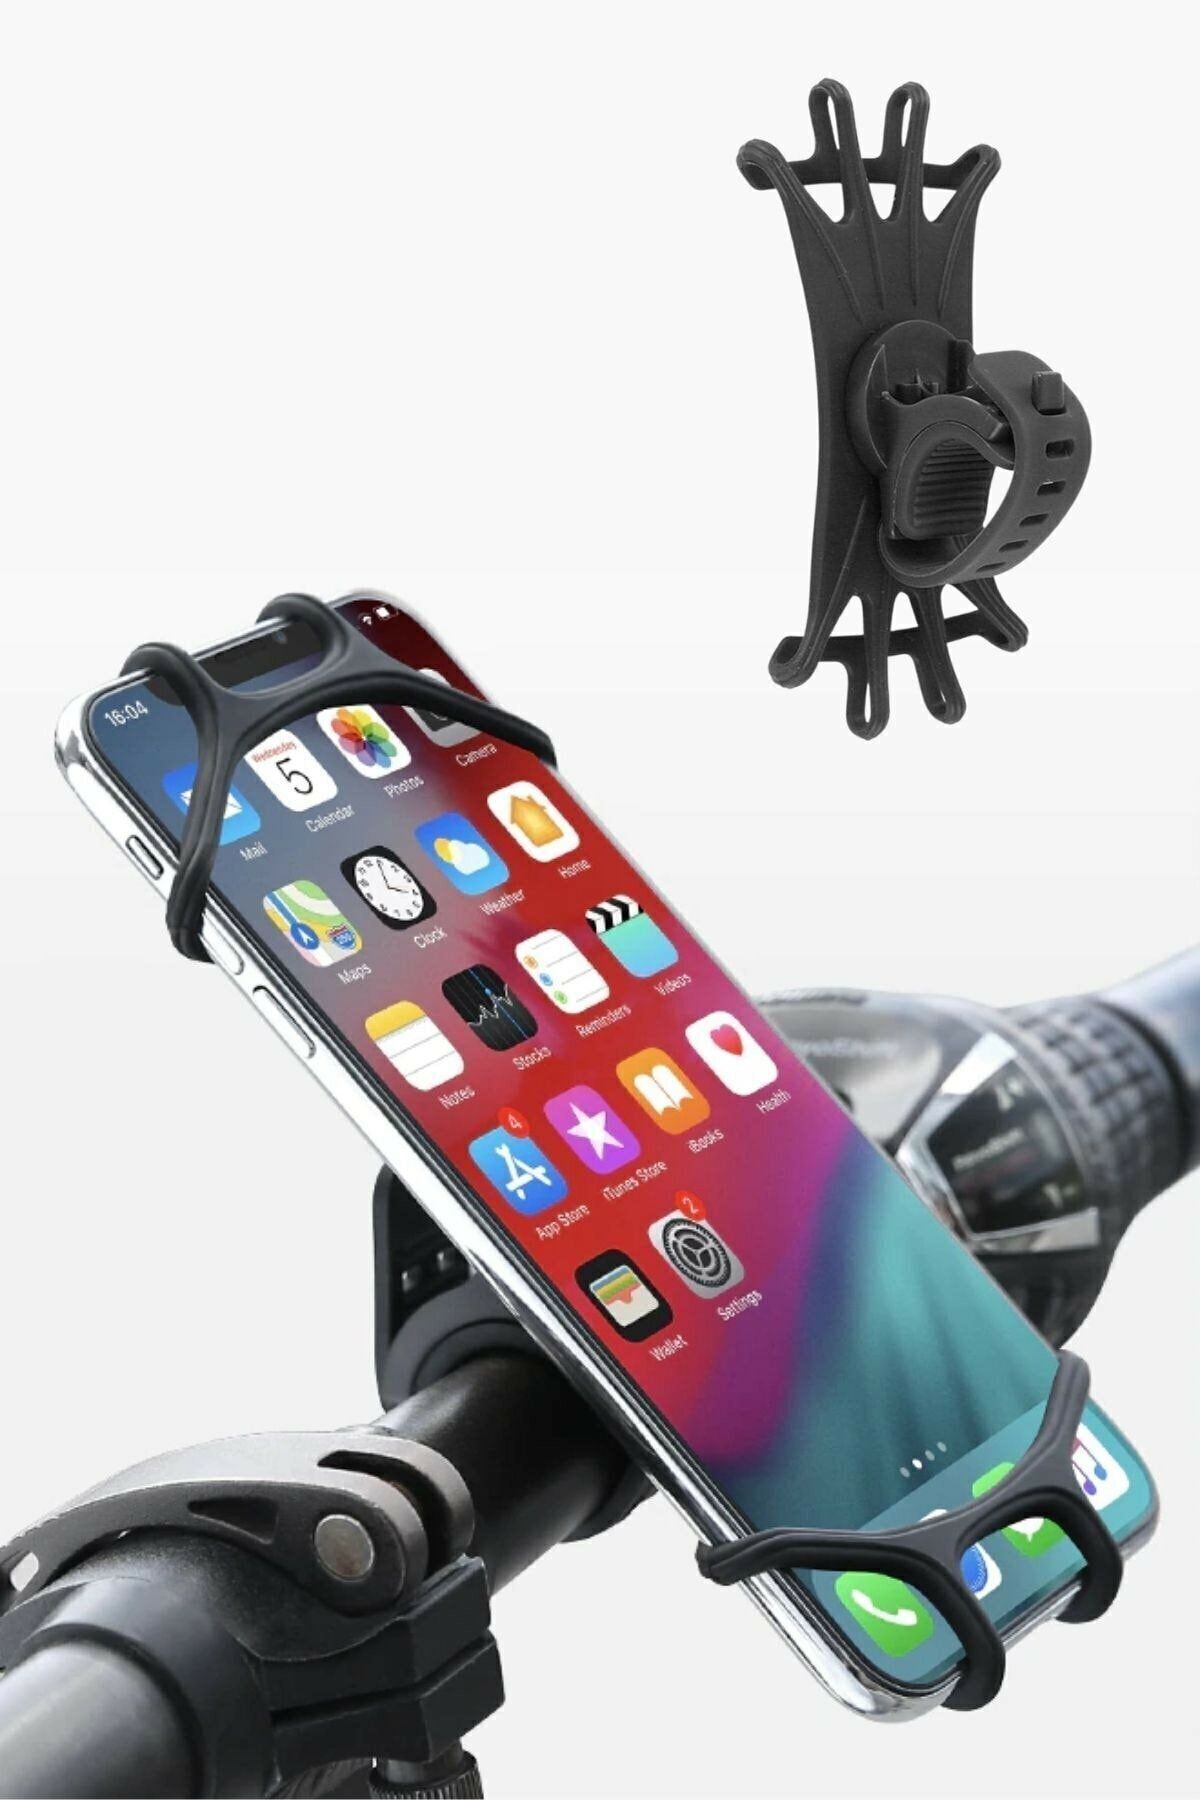 AnkaShop Motosiklet Telefon Tutucu Silikon Ahtapot Tüm Modellerle Uyumlu Motor Bisiklet Gidon Telefon Tutucu